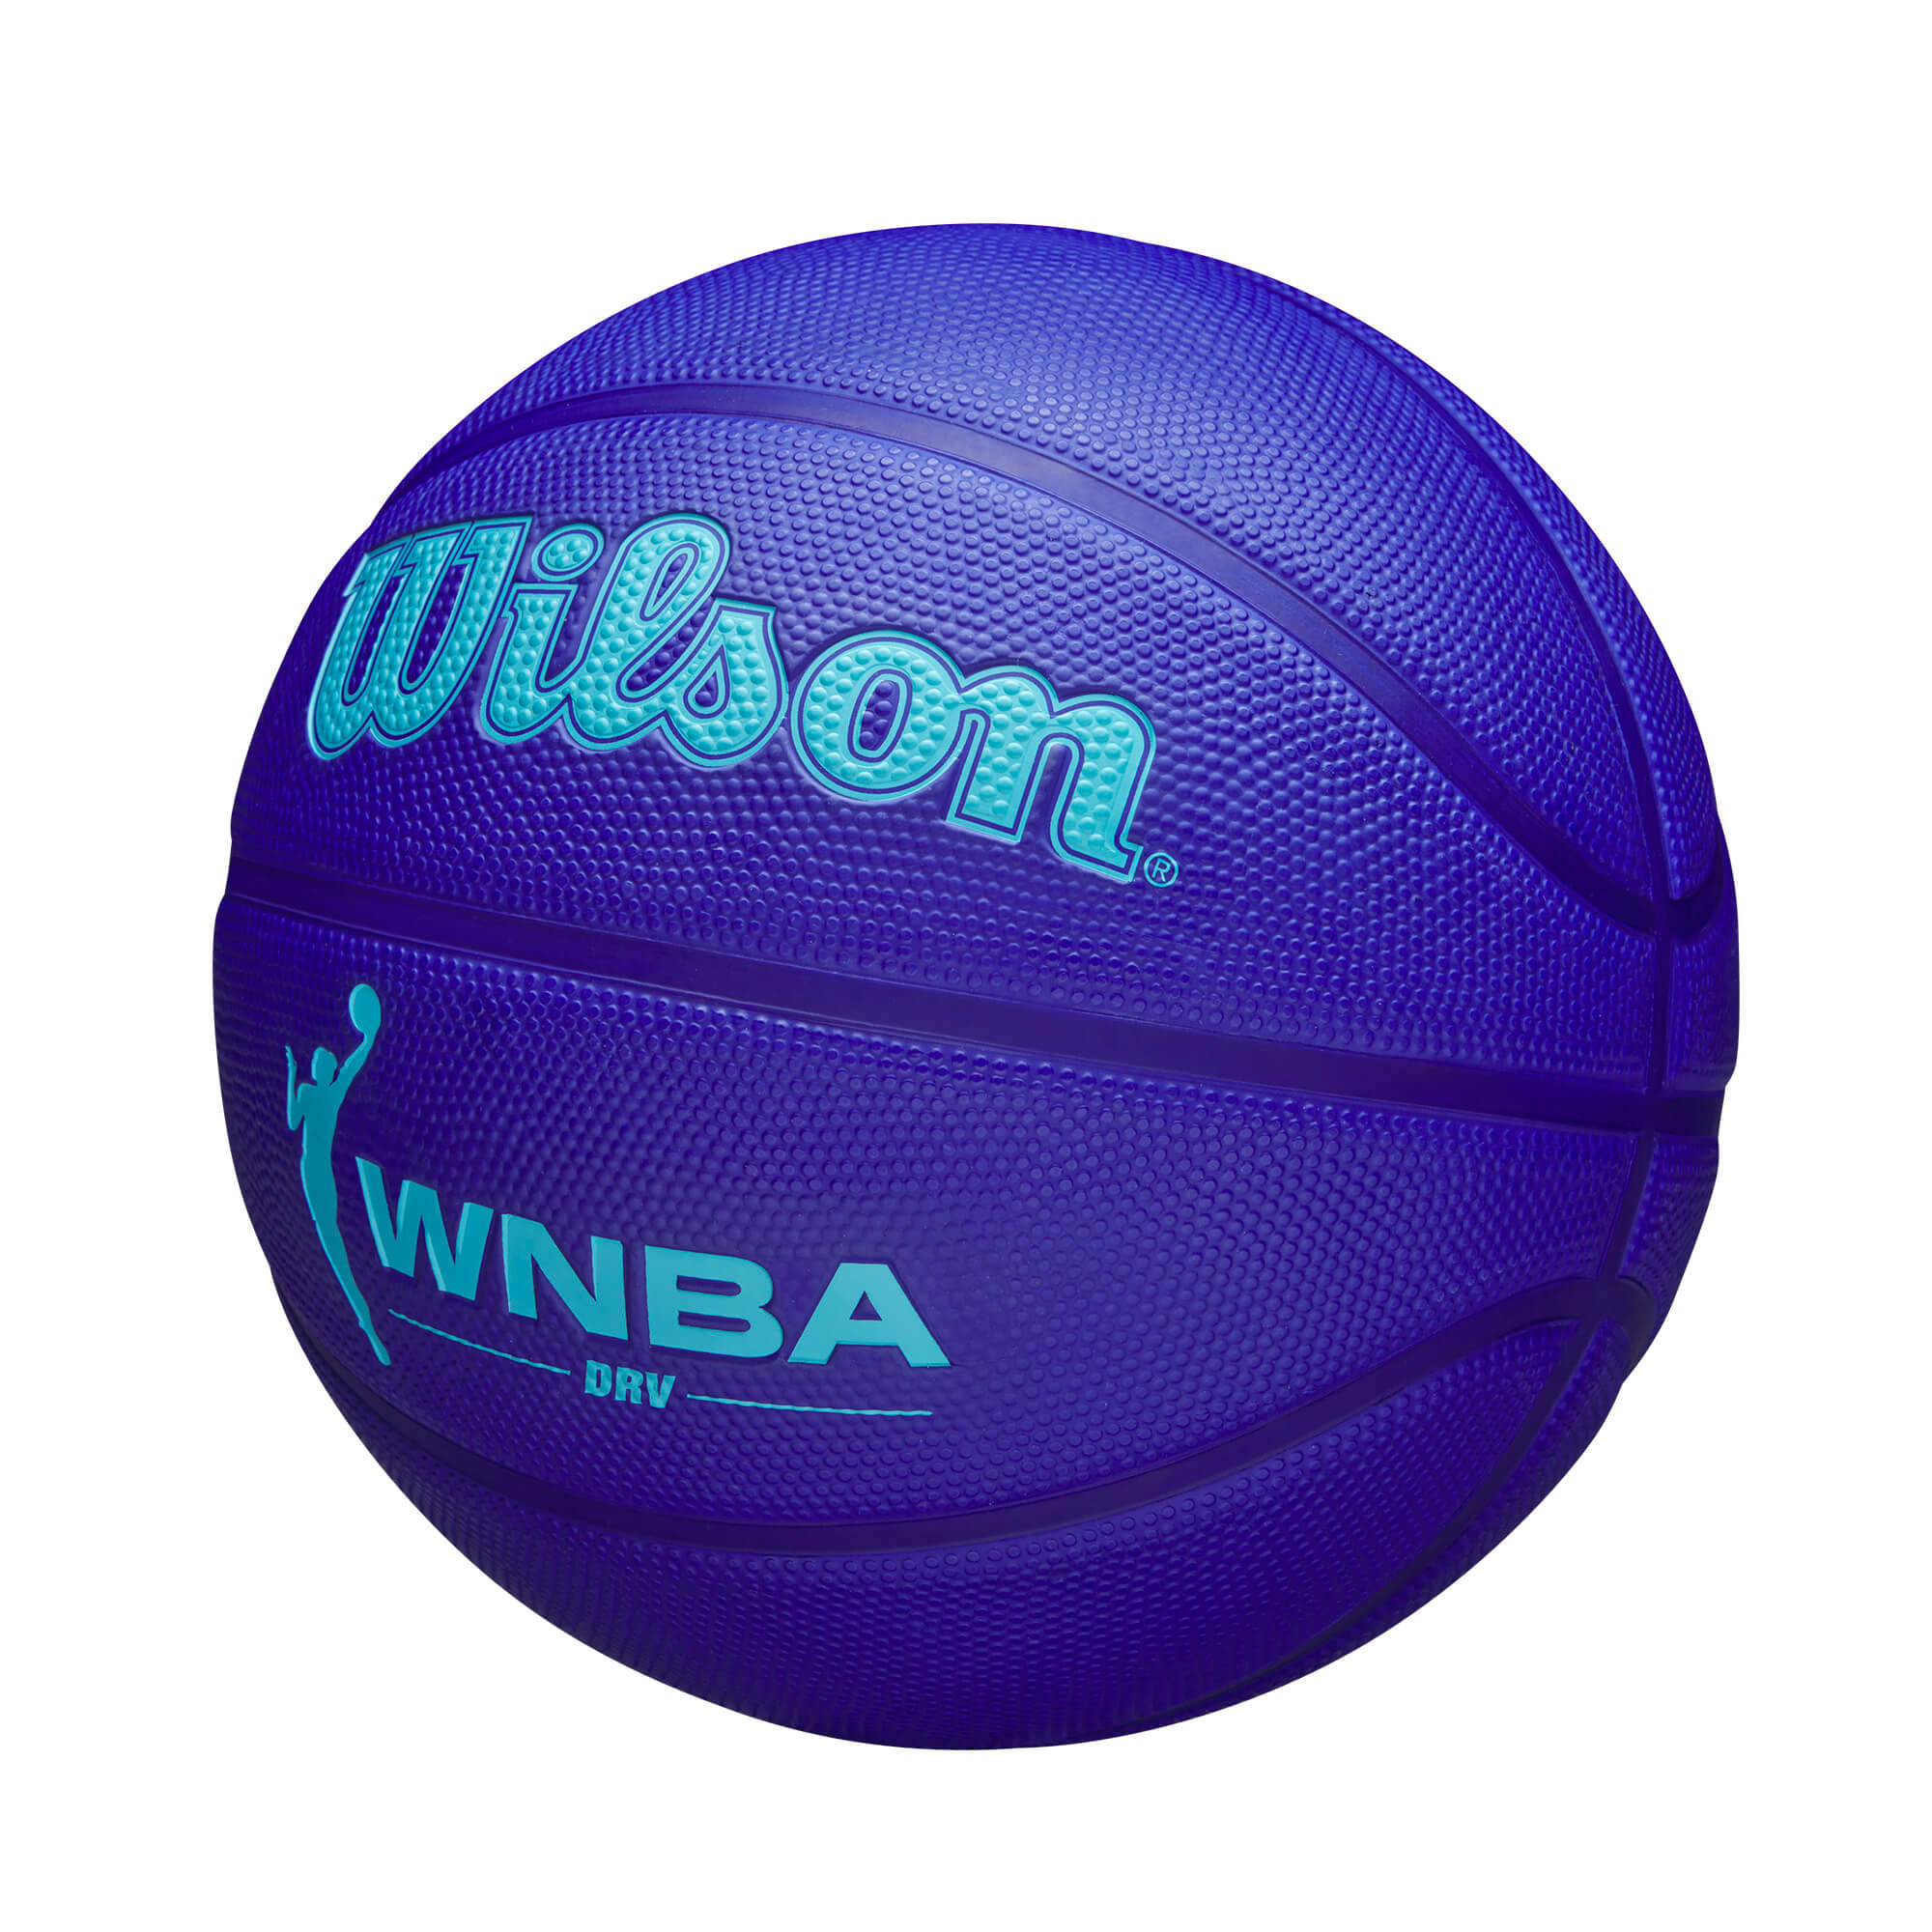 Ballons de basket WNBA DRV Blue